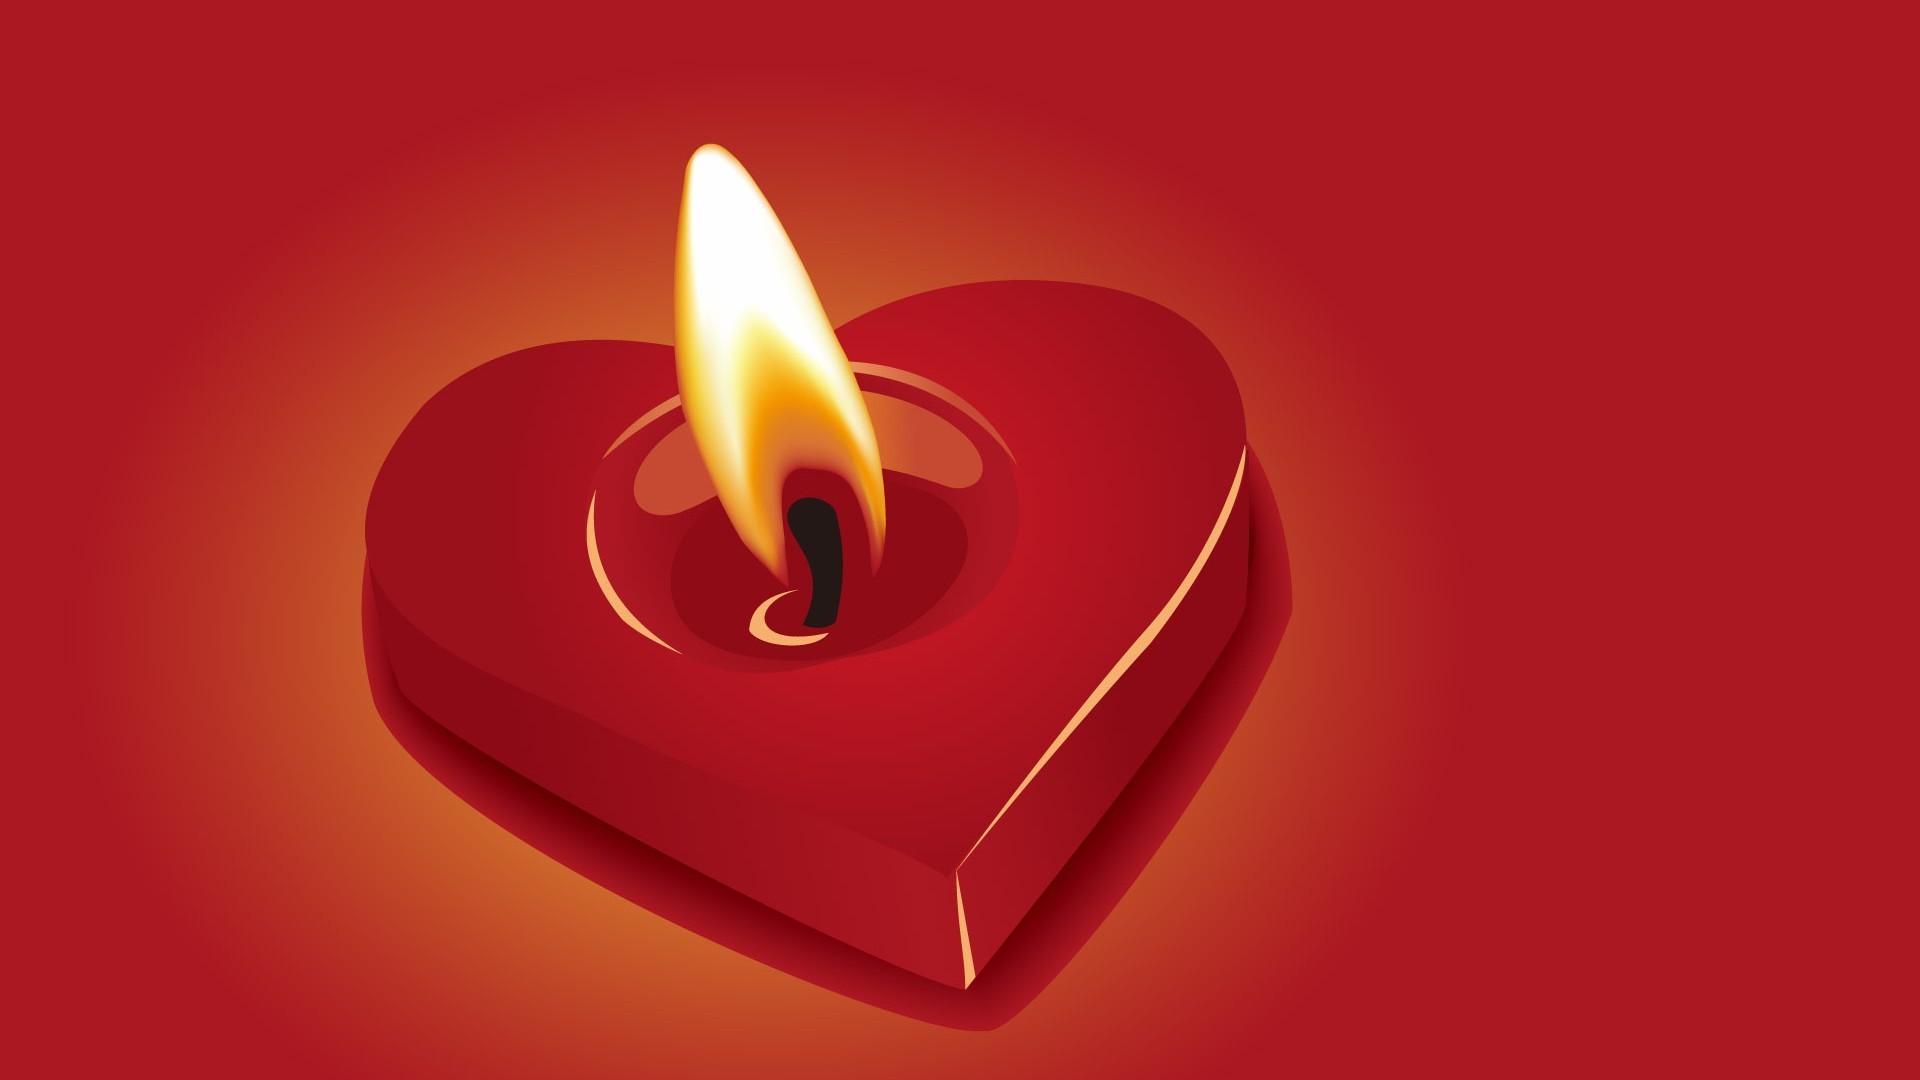 hearts love flame romance romantic symbol heart candle desktop light celebration hot